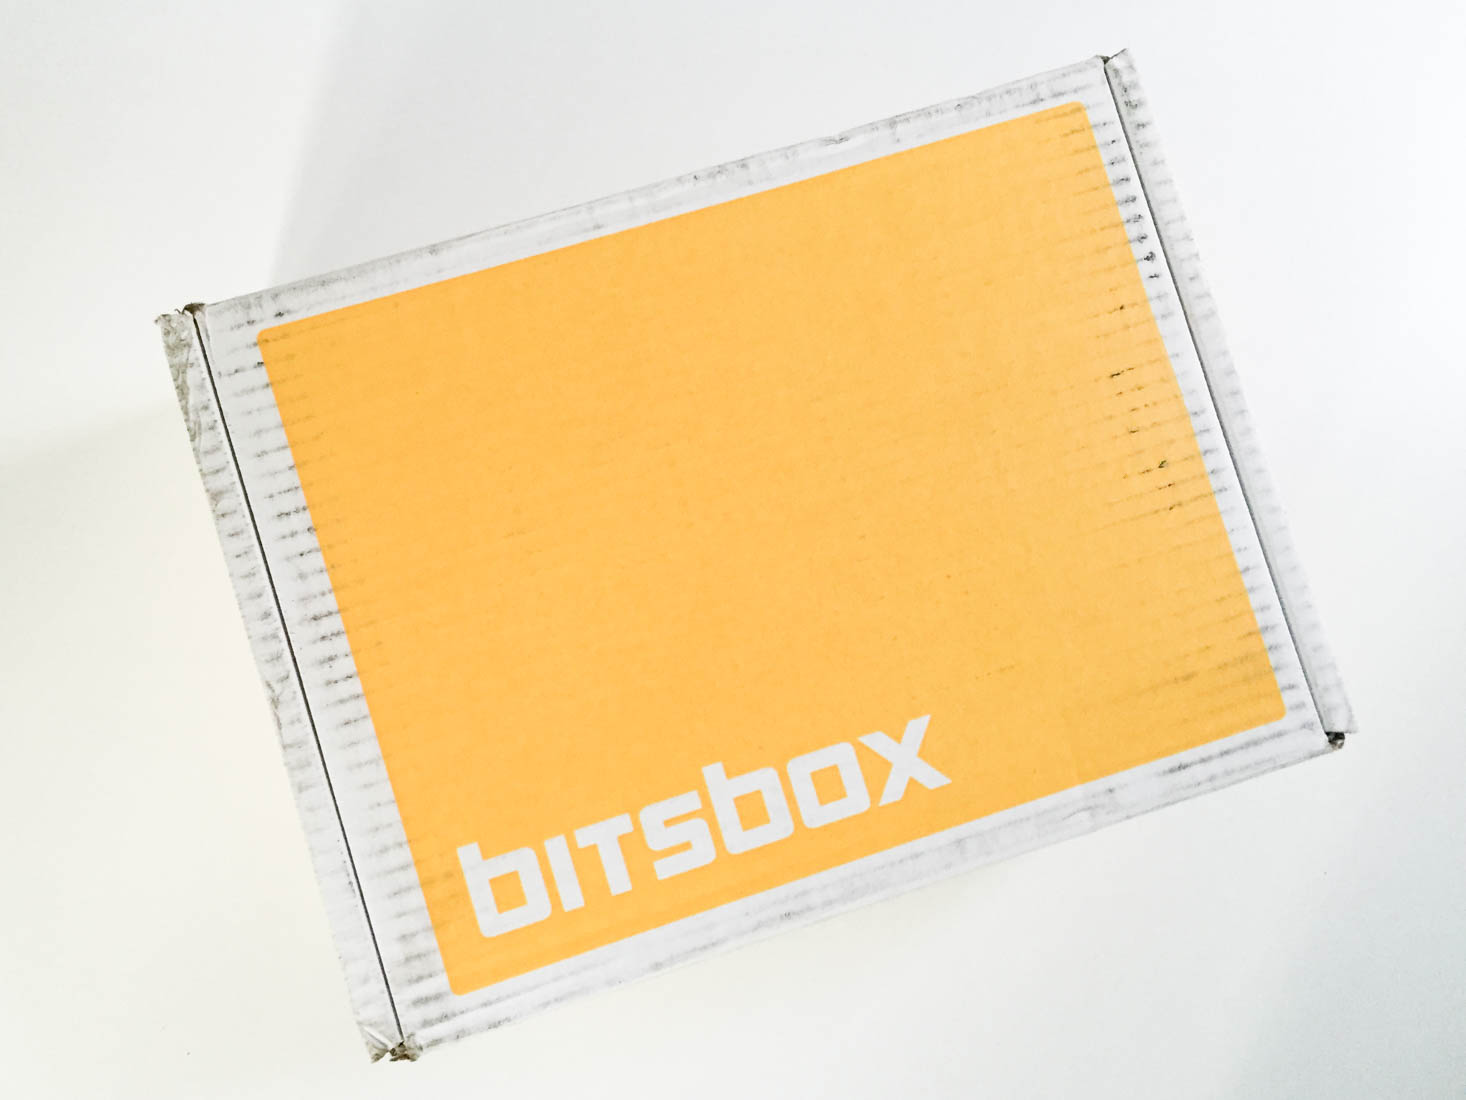 Bitsbox Subscription Box Review – September 2016